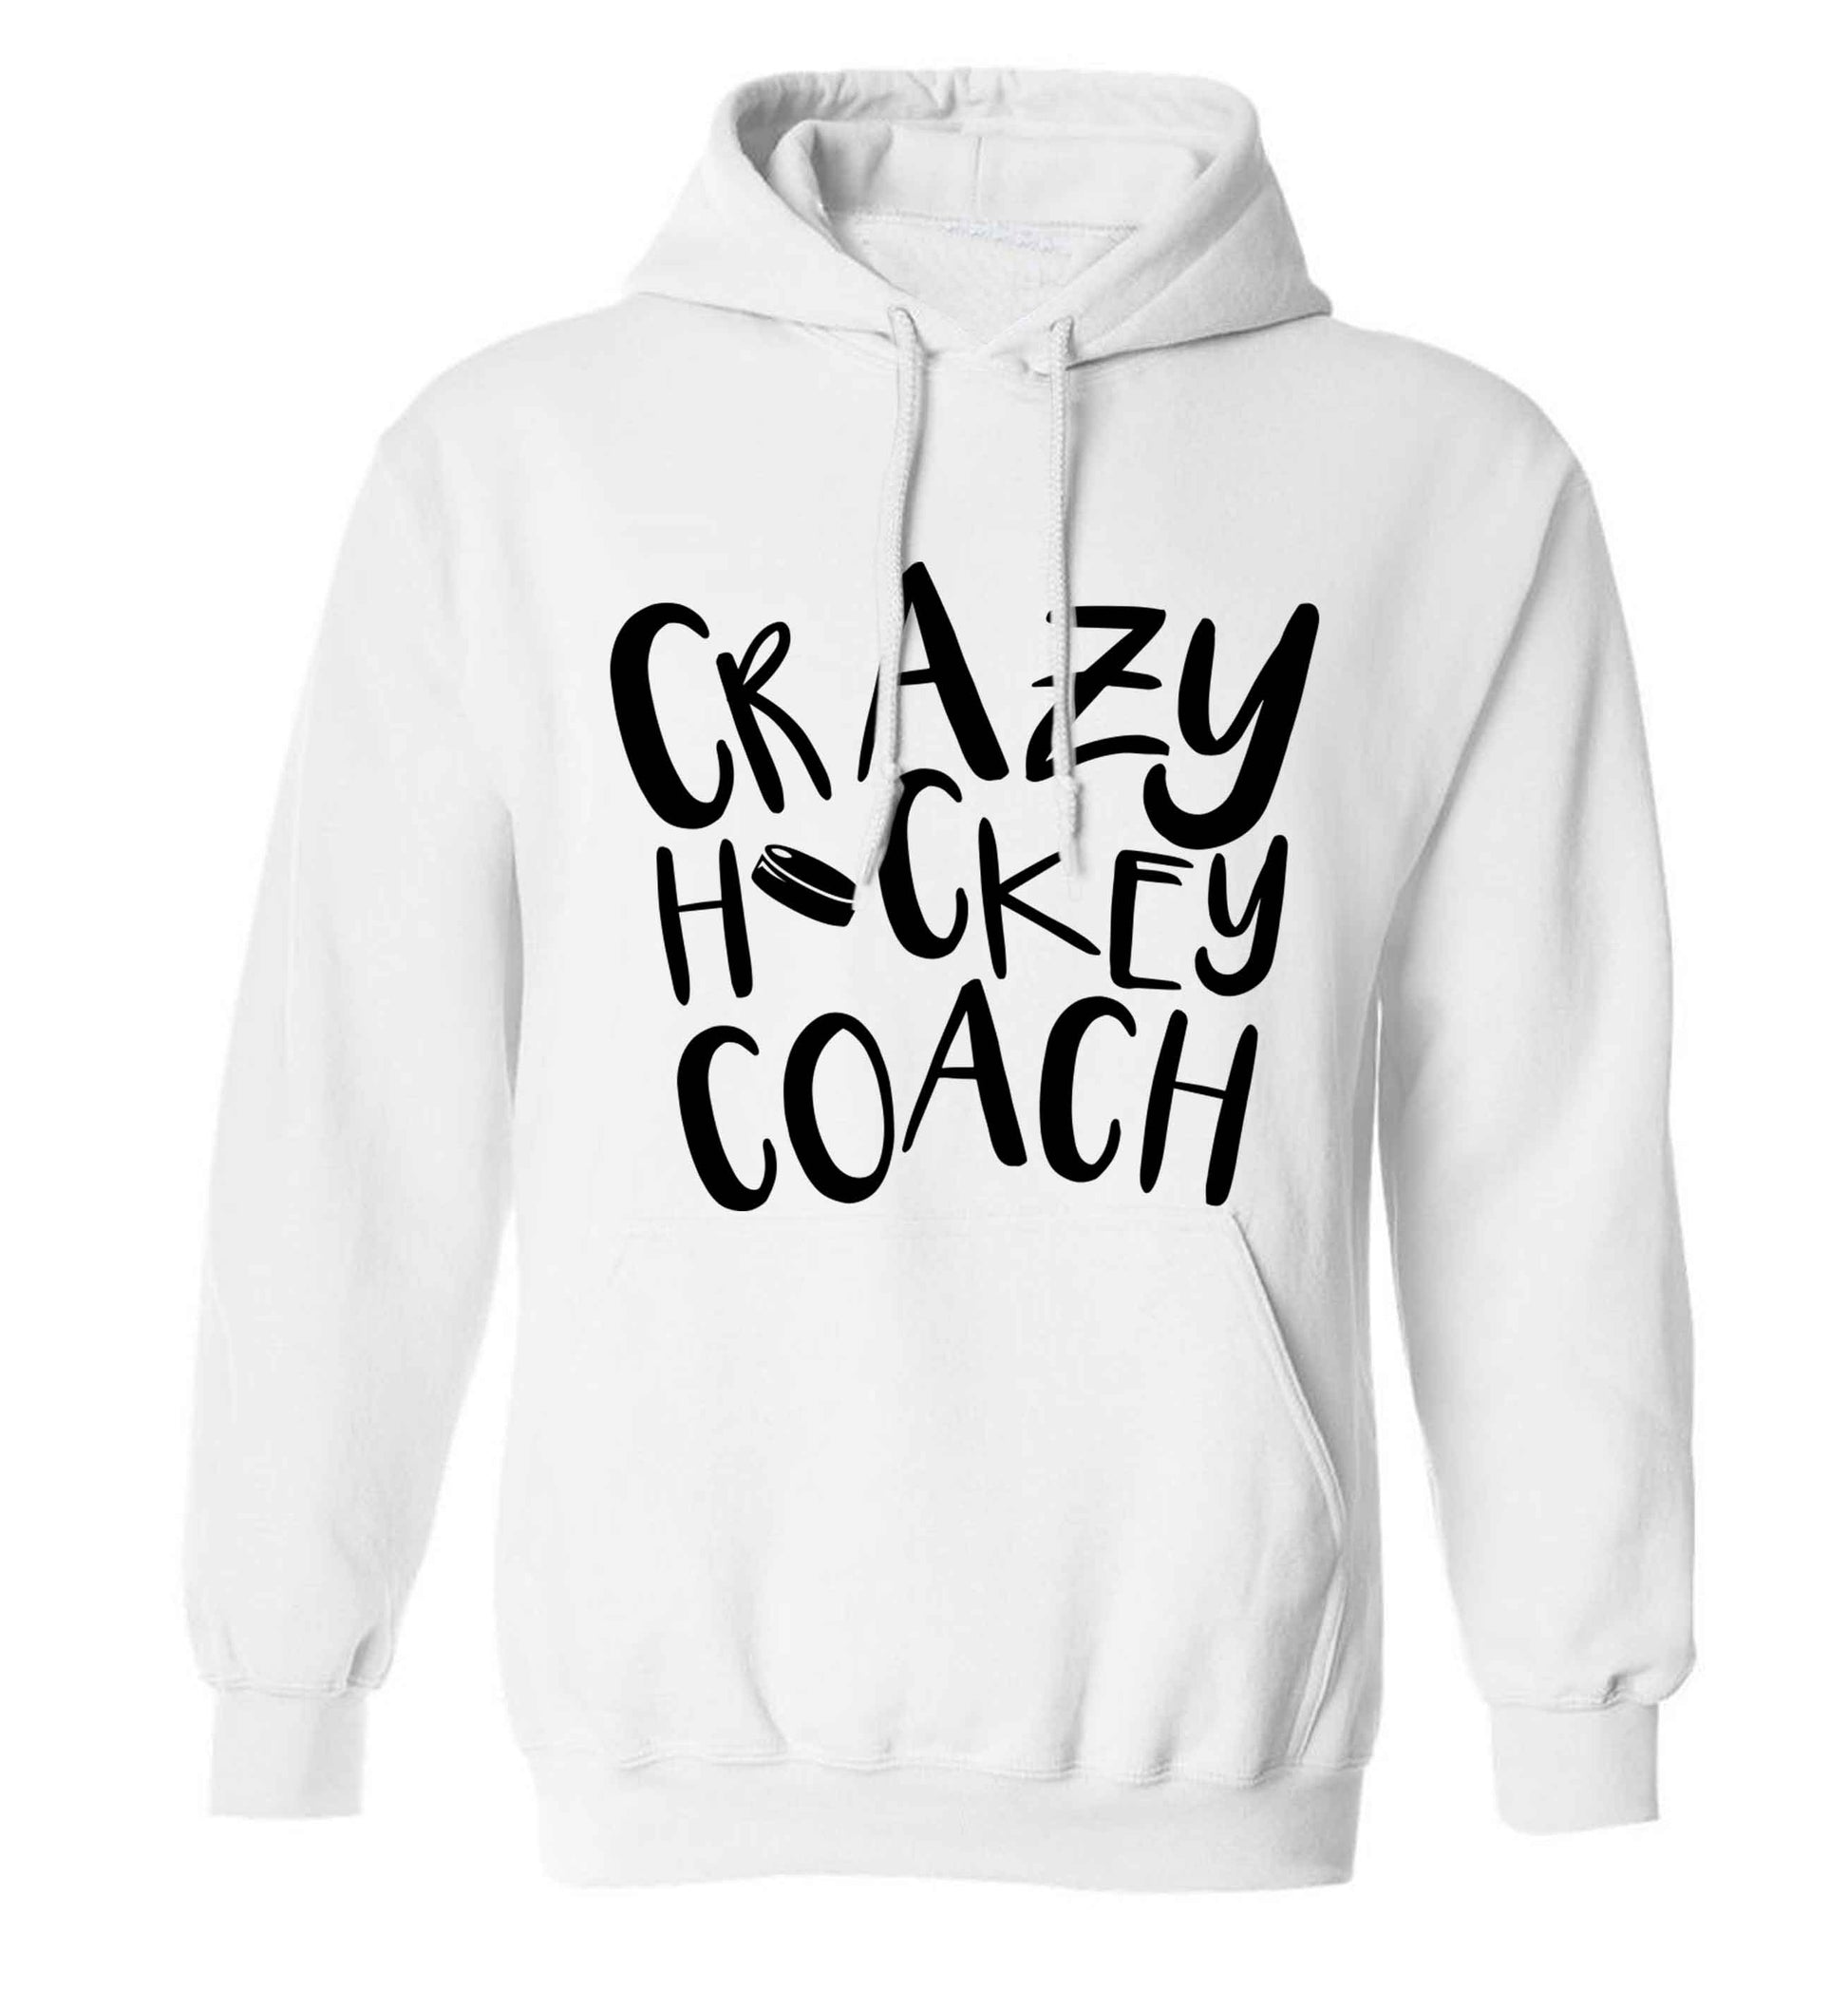 Crazy hockey coach adults unisex white hoodie 2XL